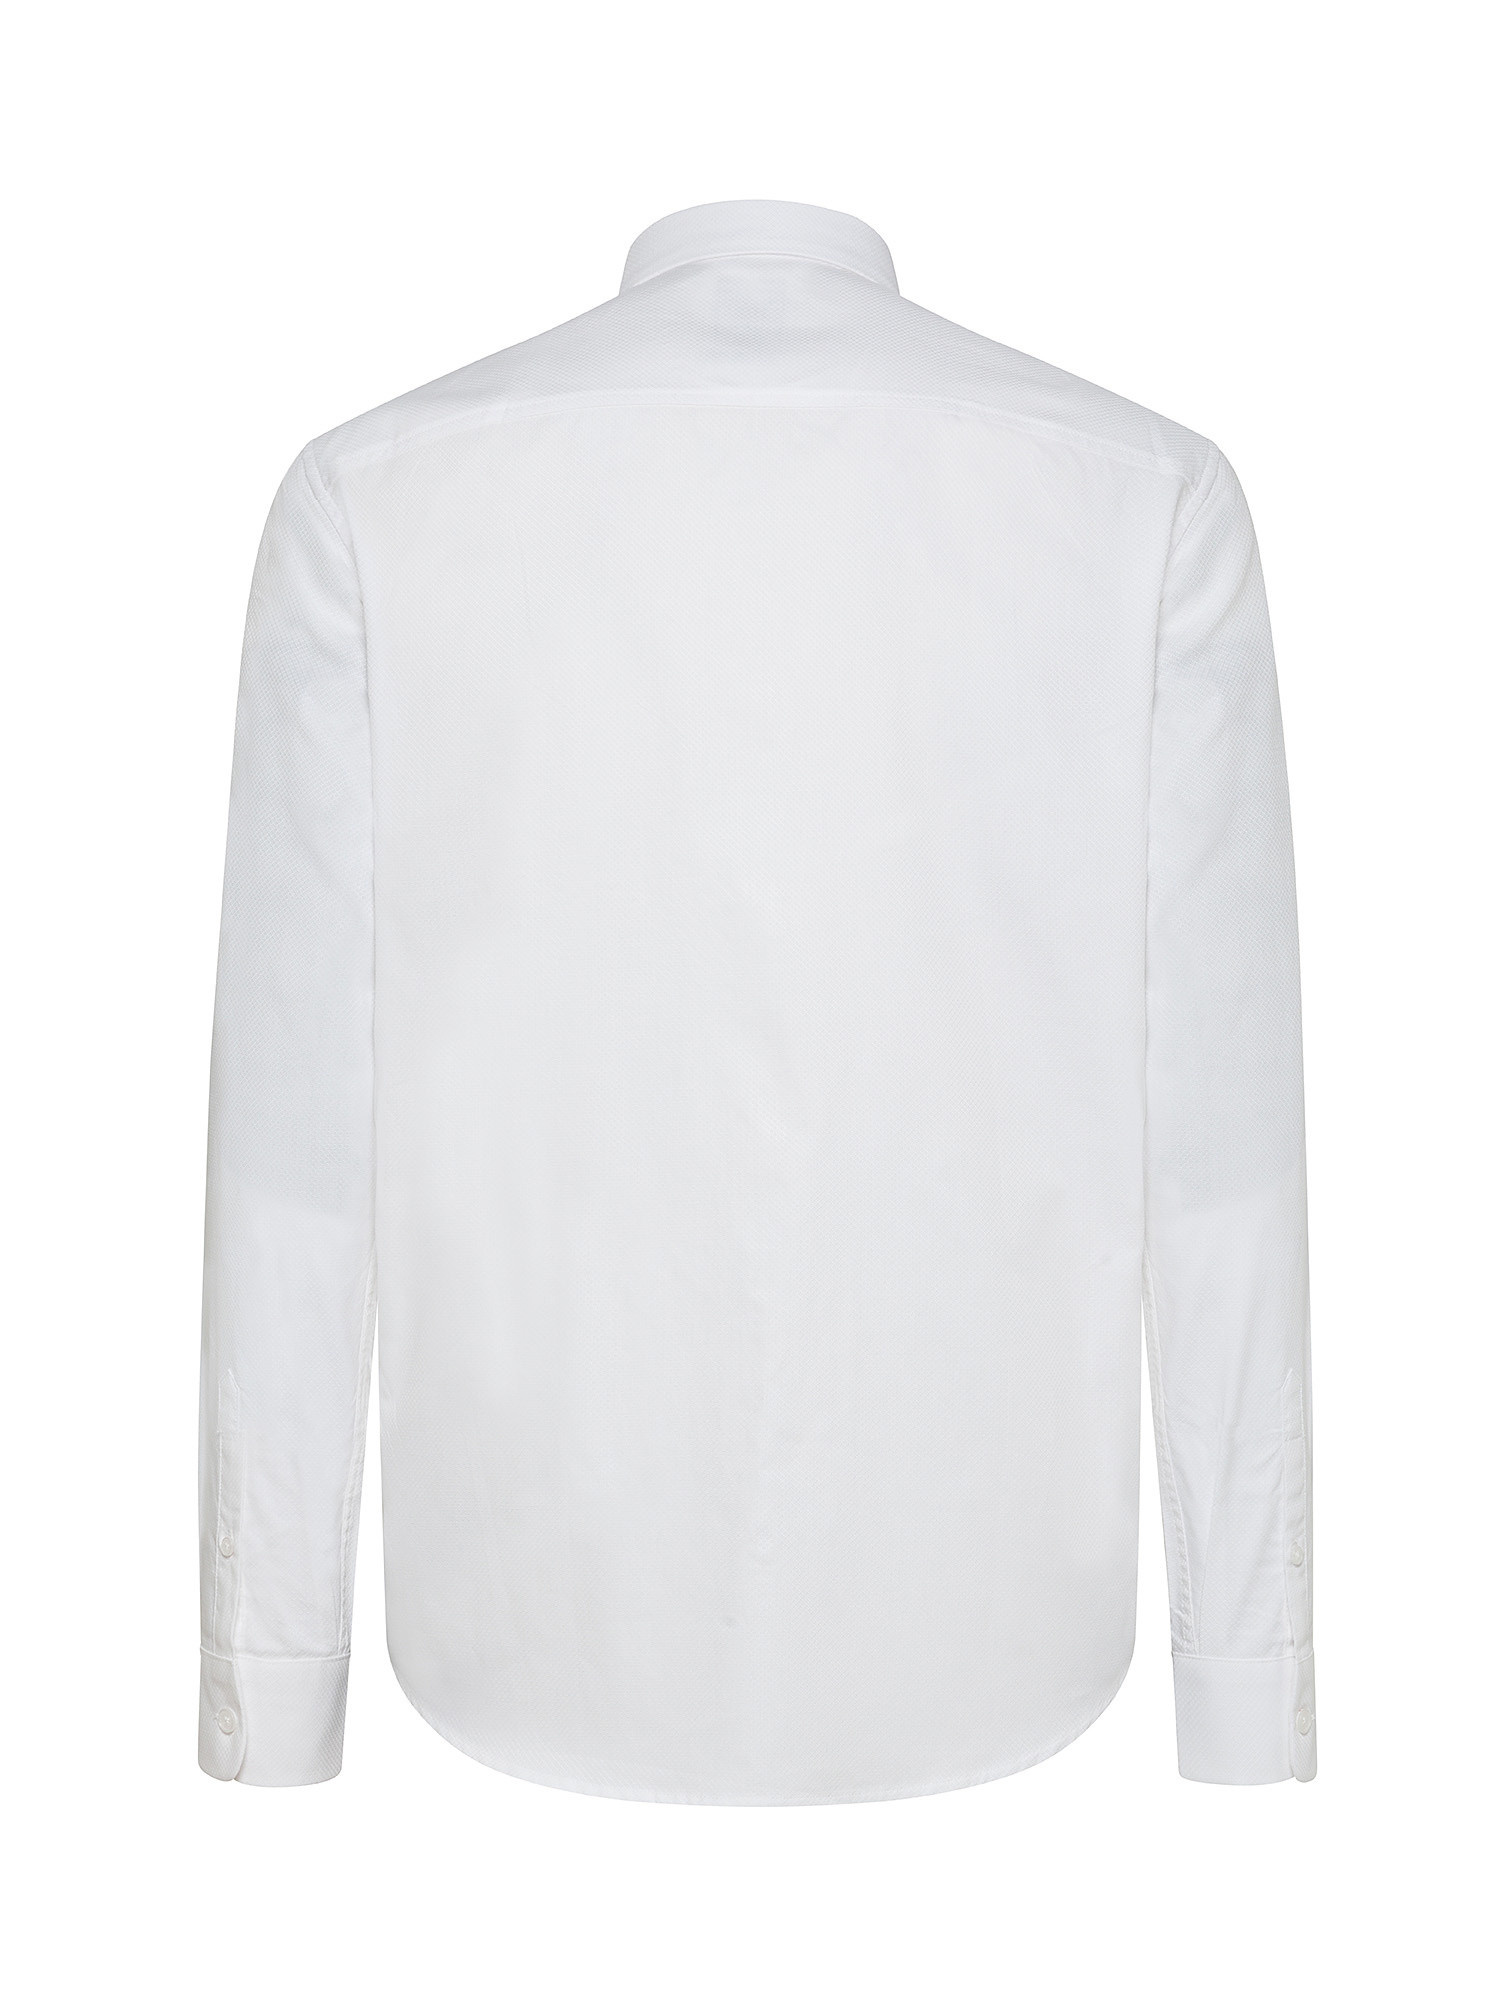 Armani Exchange - Regular fit shirt in cotton, White, large image number 2